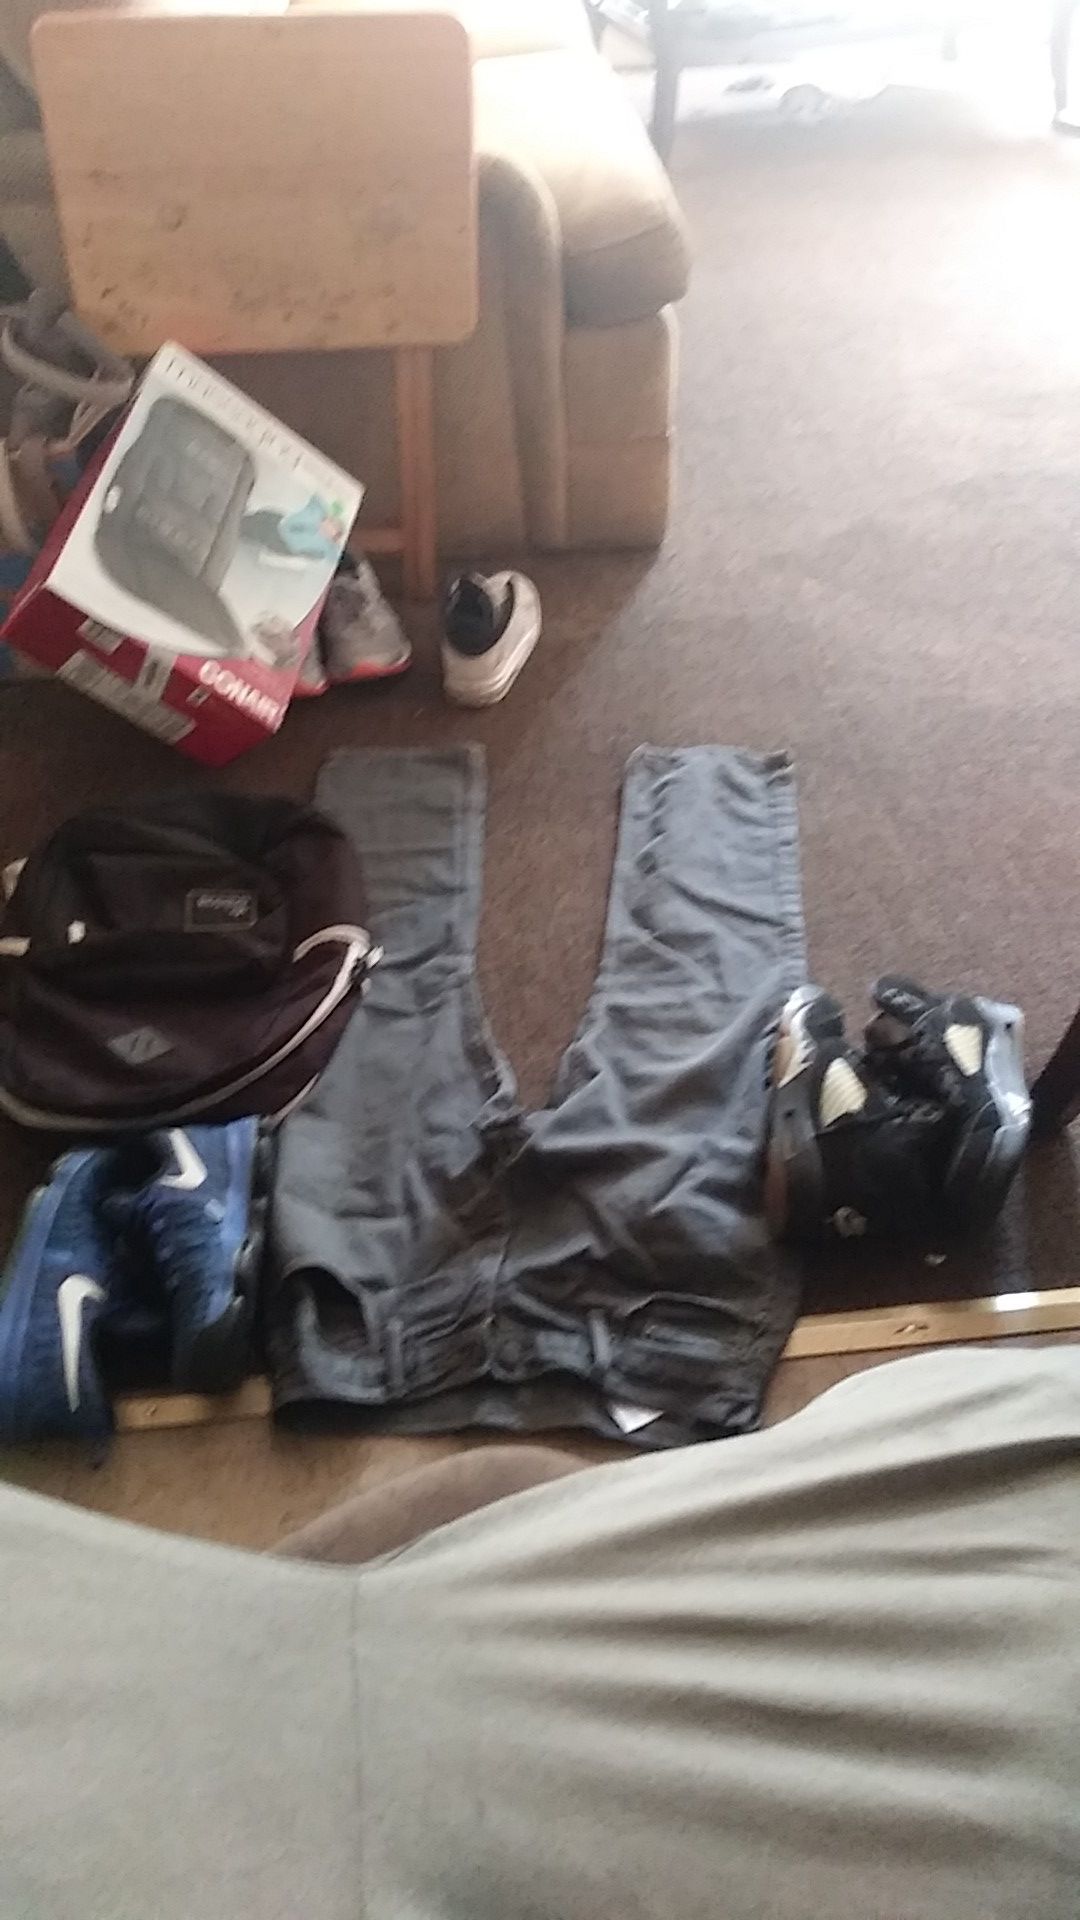 Nikes Jordans Adidas bookbag Levi's 30-30 give me an offer